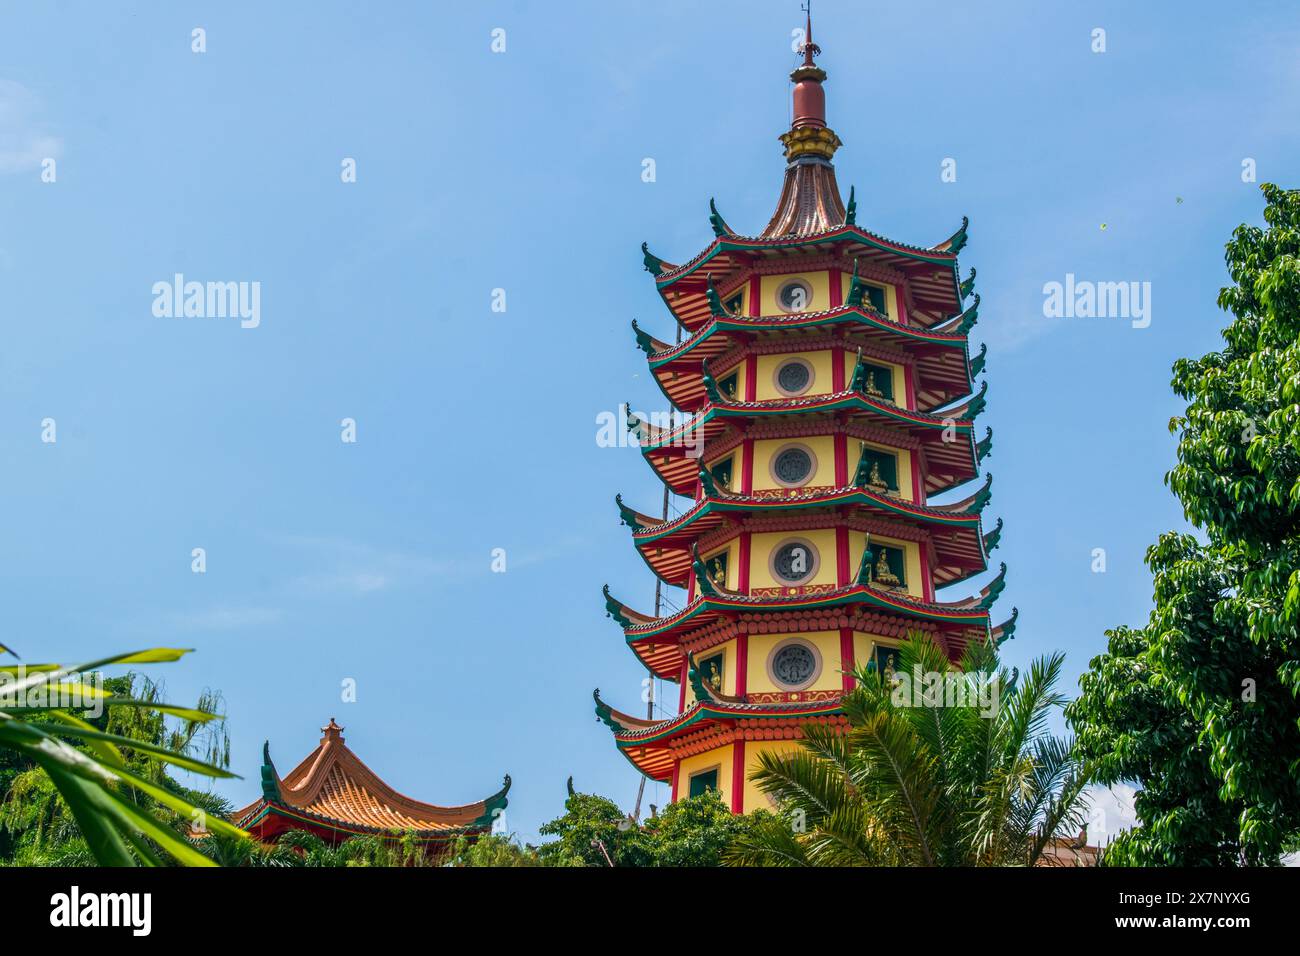 L'affascinante pagoda Avalokitesvara e popolare destinazione turistica situata a Semarang, Giava centrale, Indonesia. Foto Stock